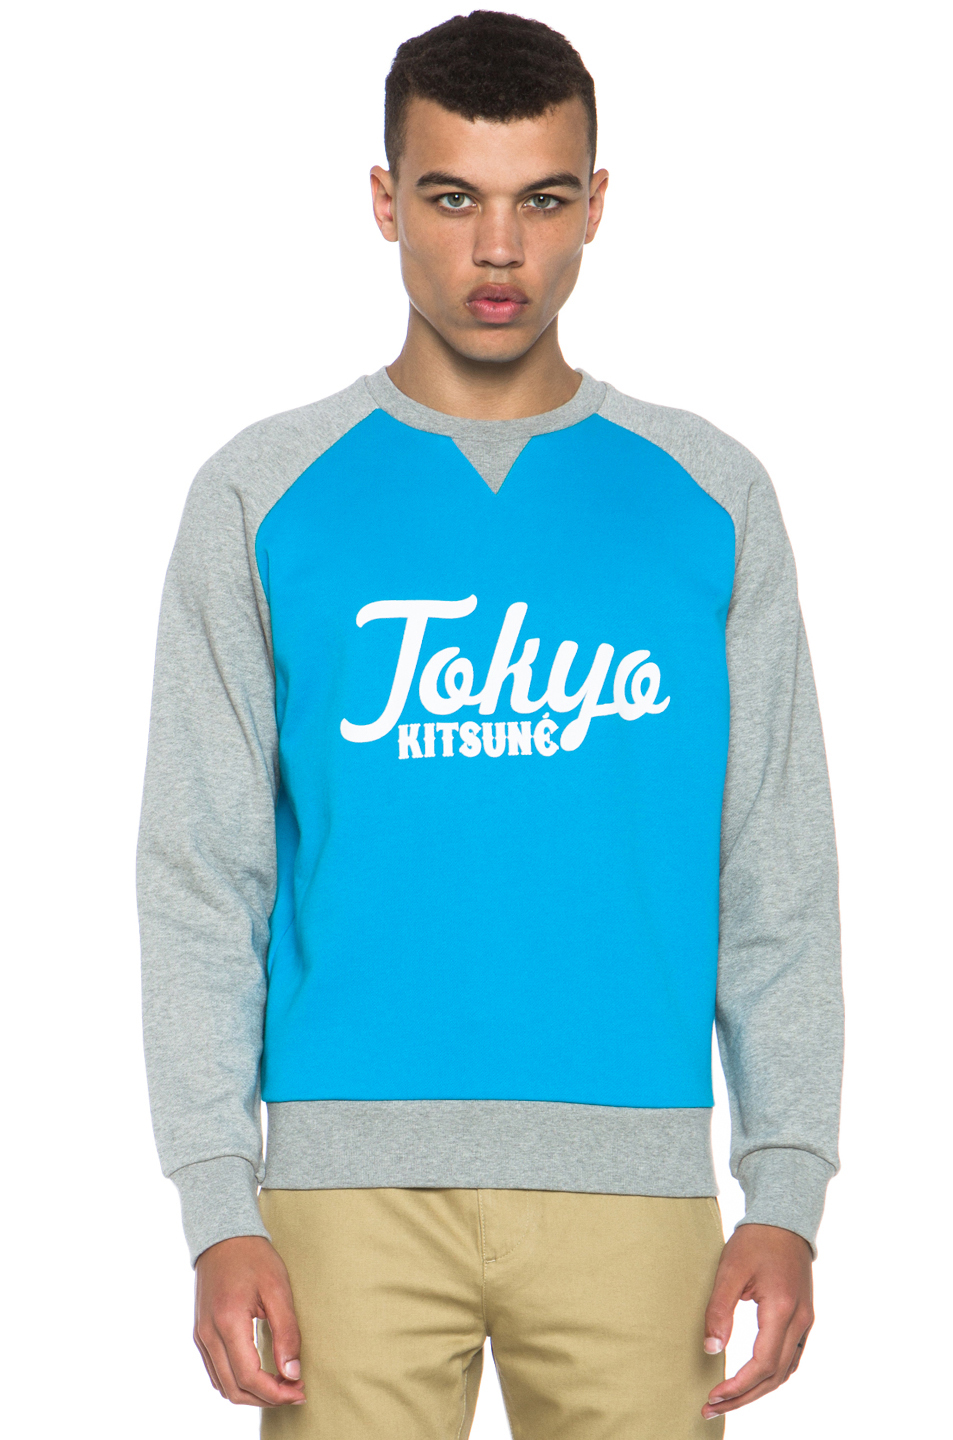 Kitsuné Tokyo Sweater